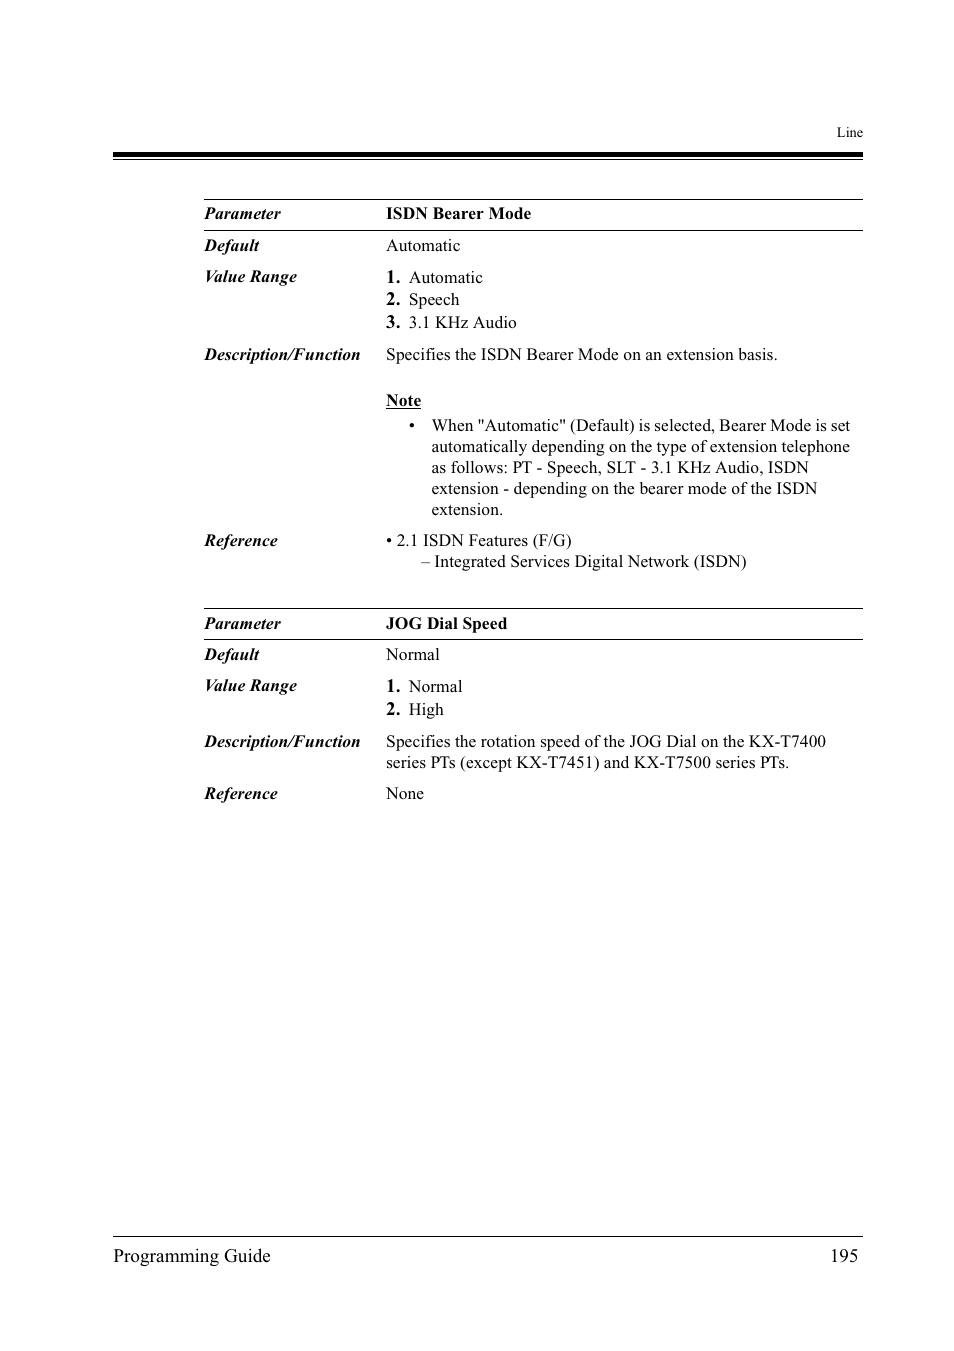 Panasonic KX-TD500 User Manual | Page 195 / 394